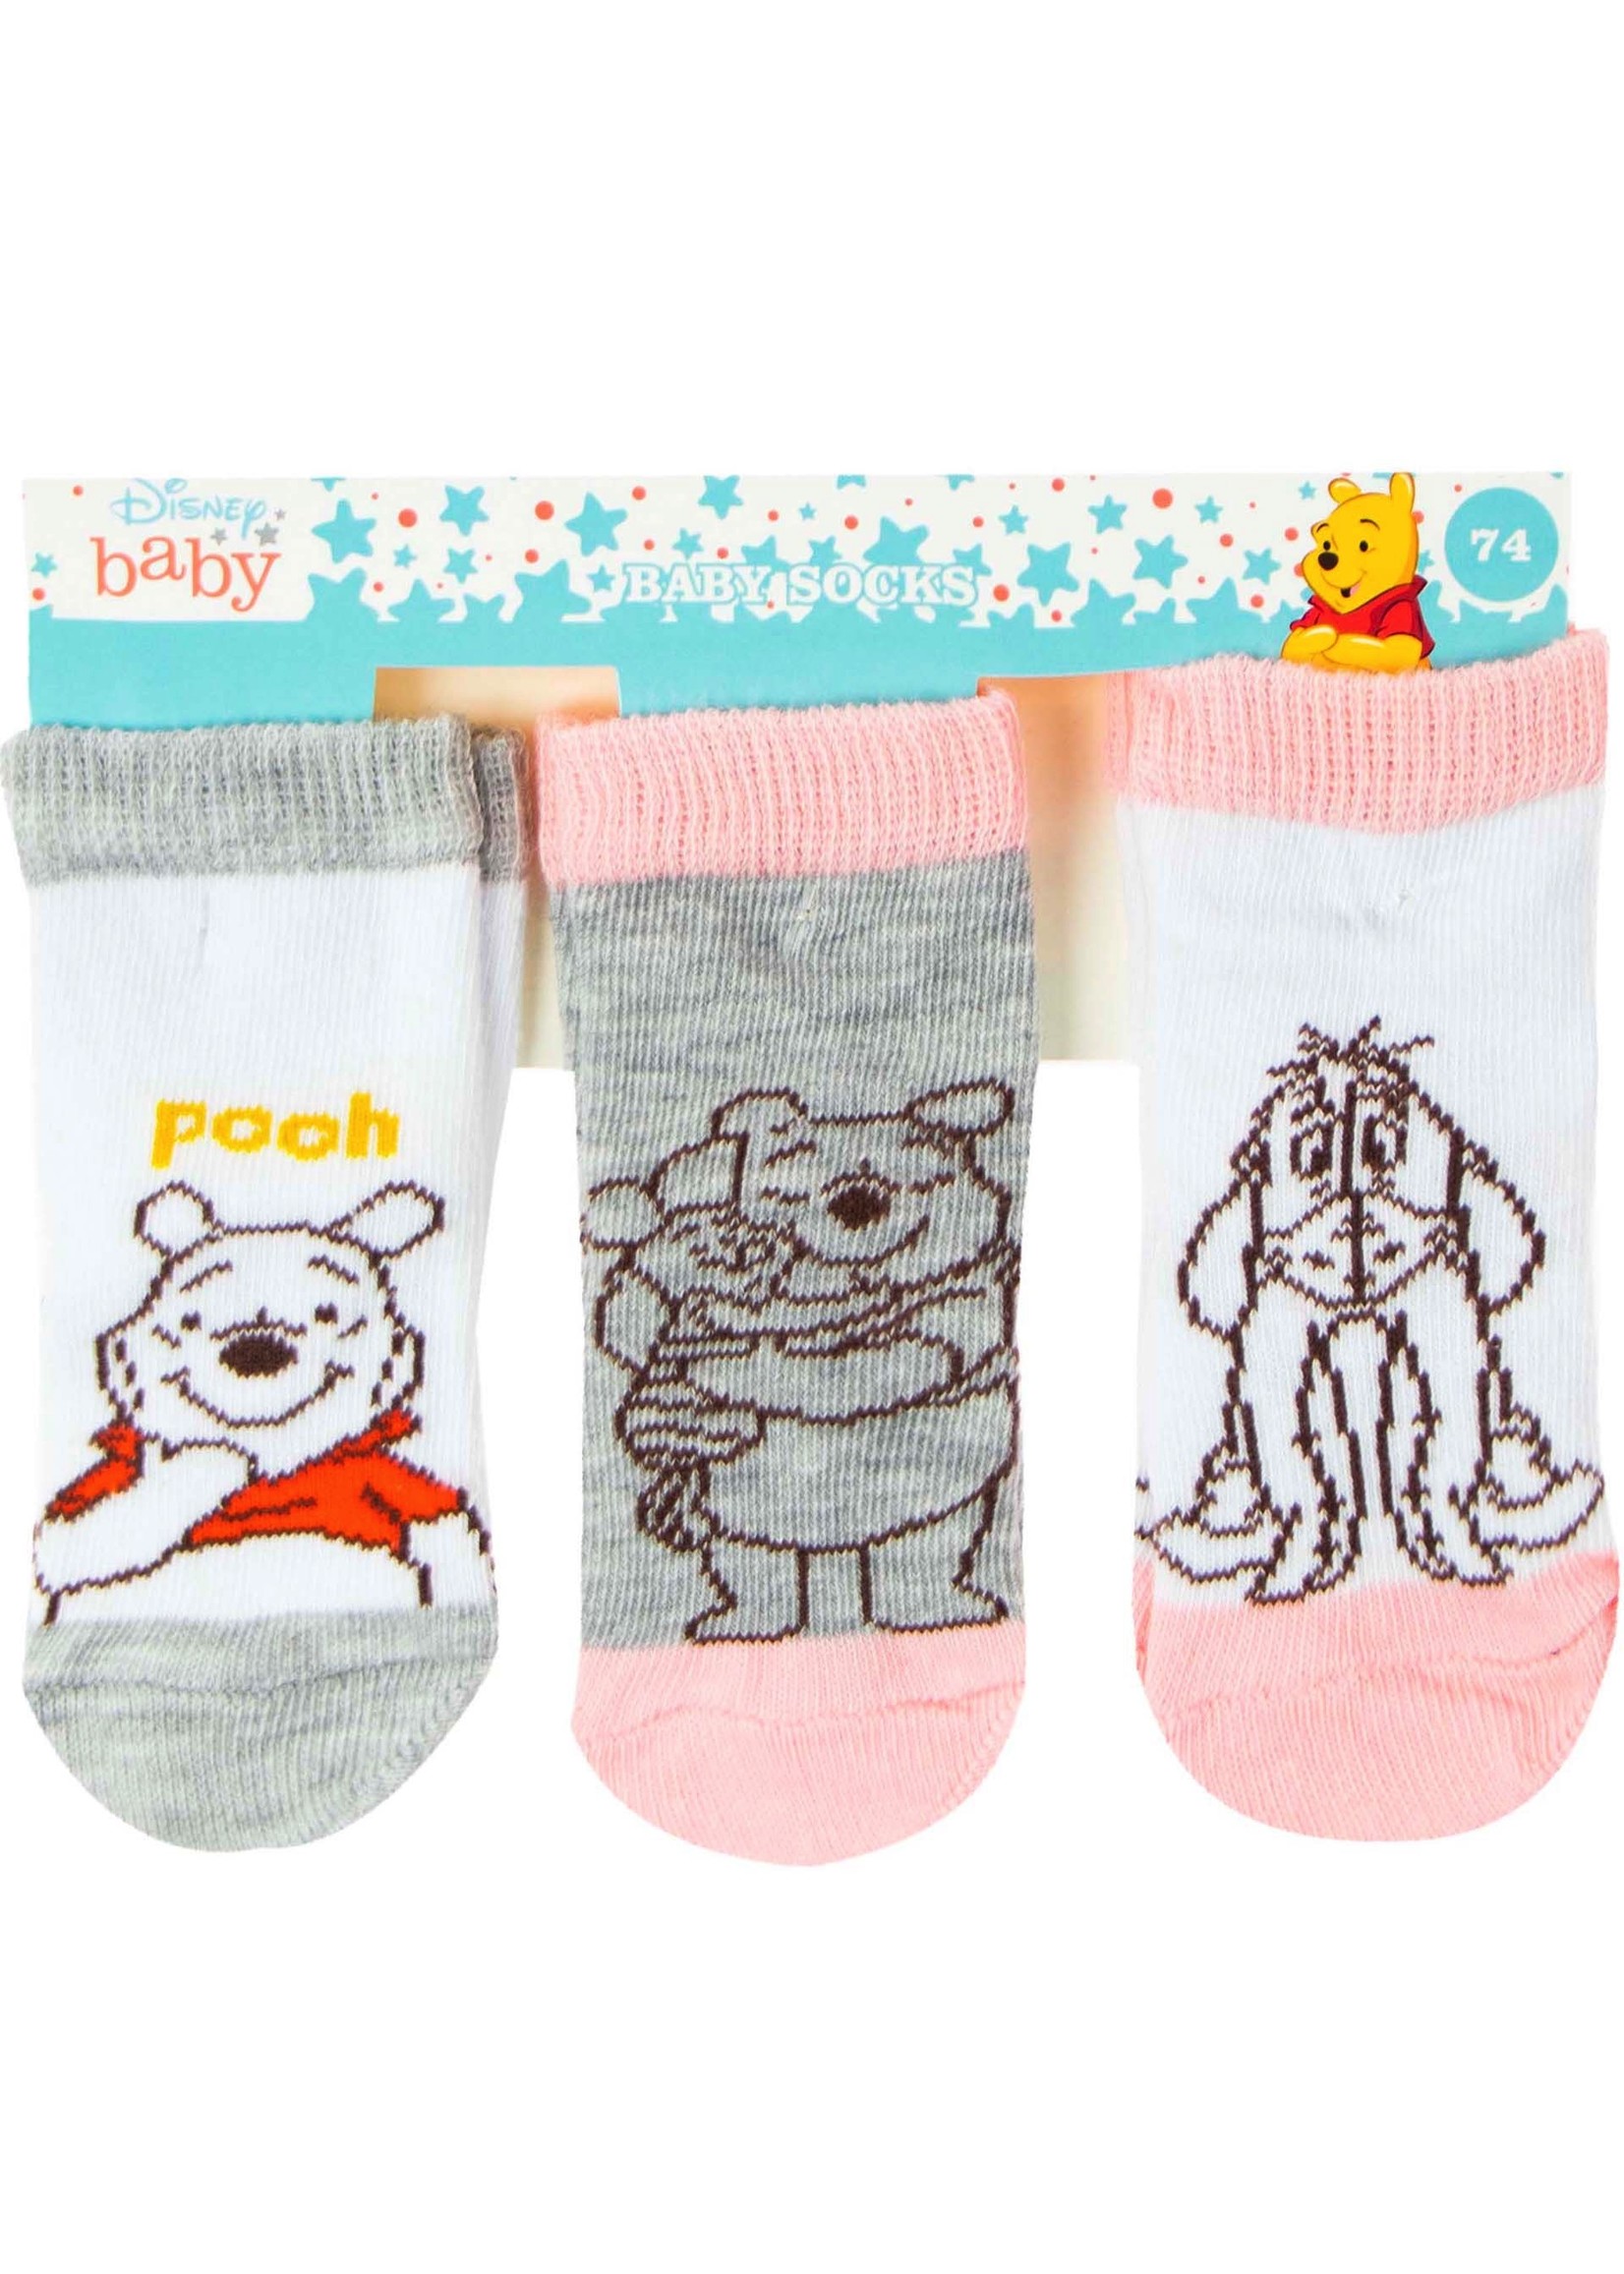 Disney baby Winnie the Pooh socks from Disney baby 3 pack